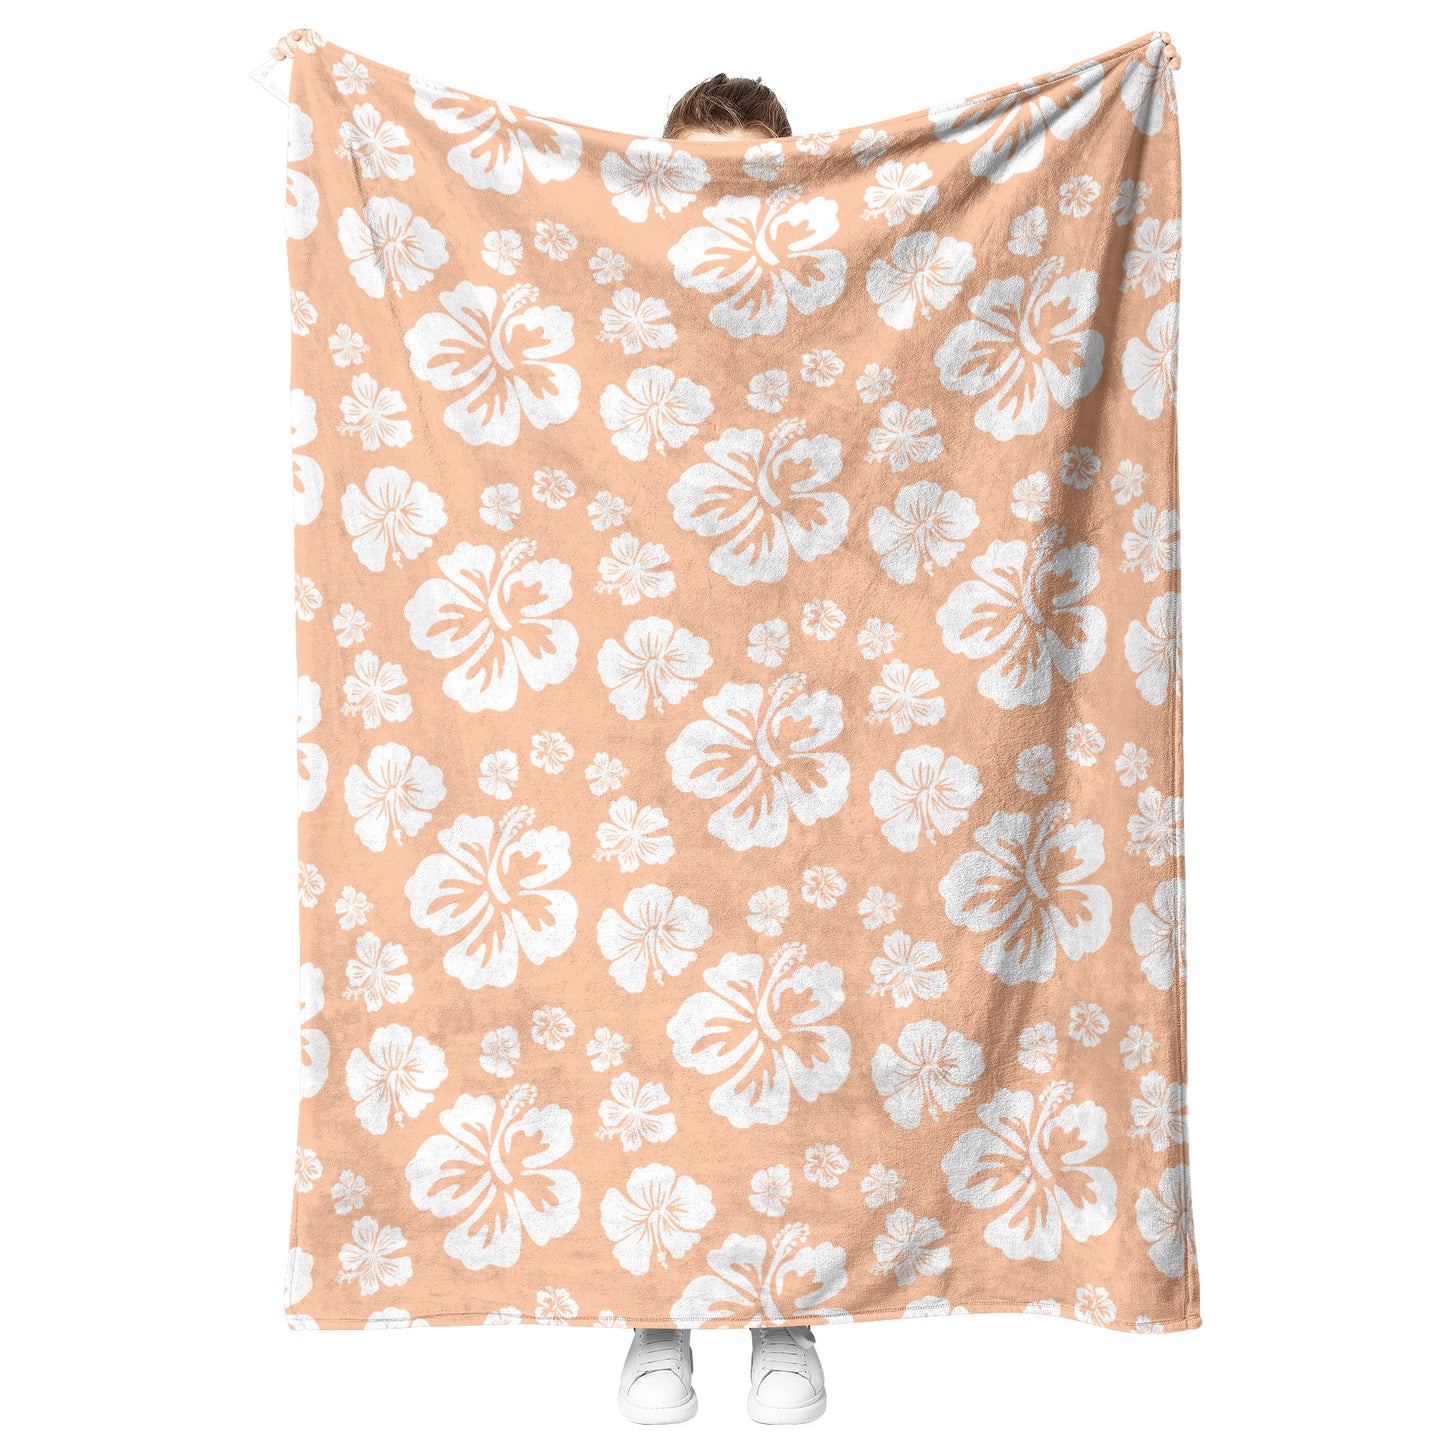 Hibiscus Soiree, White Hibiscus on Peach, Fleece Blanket